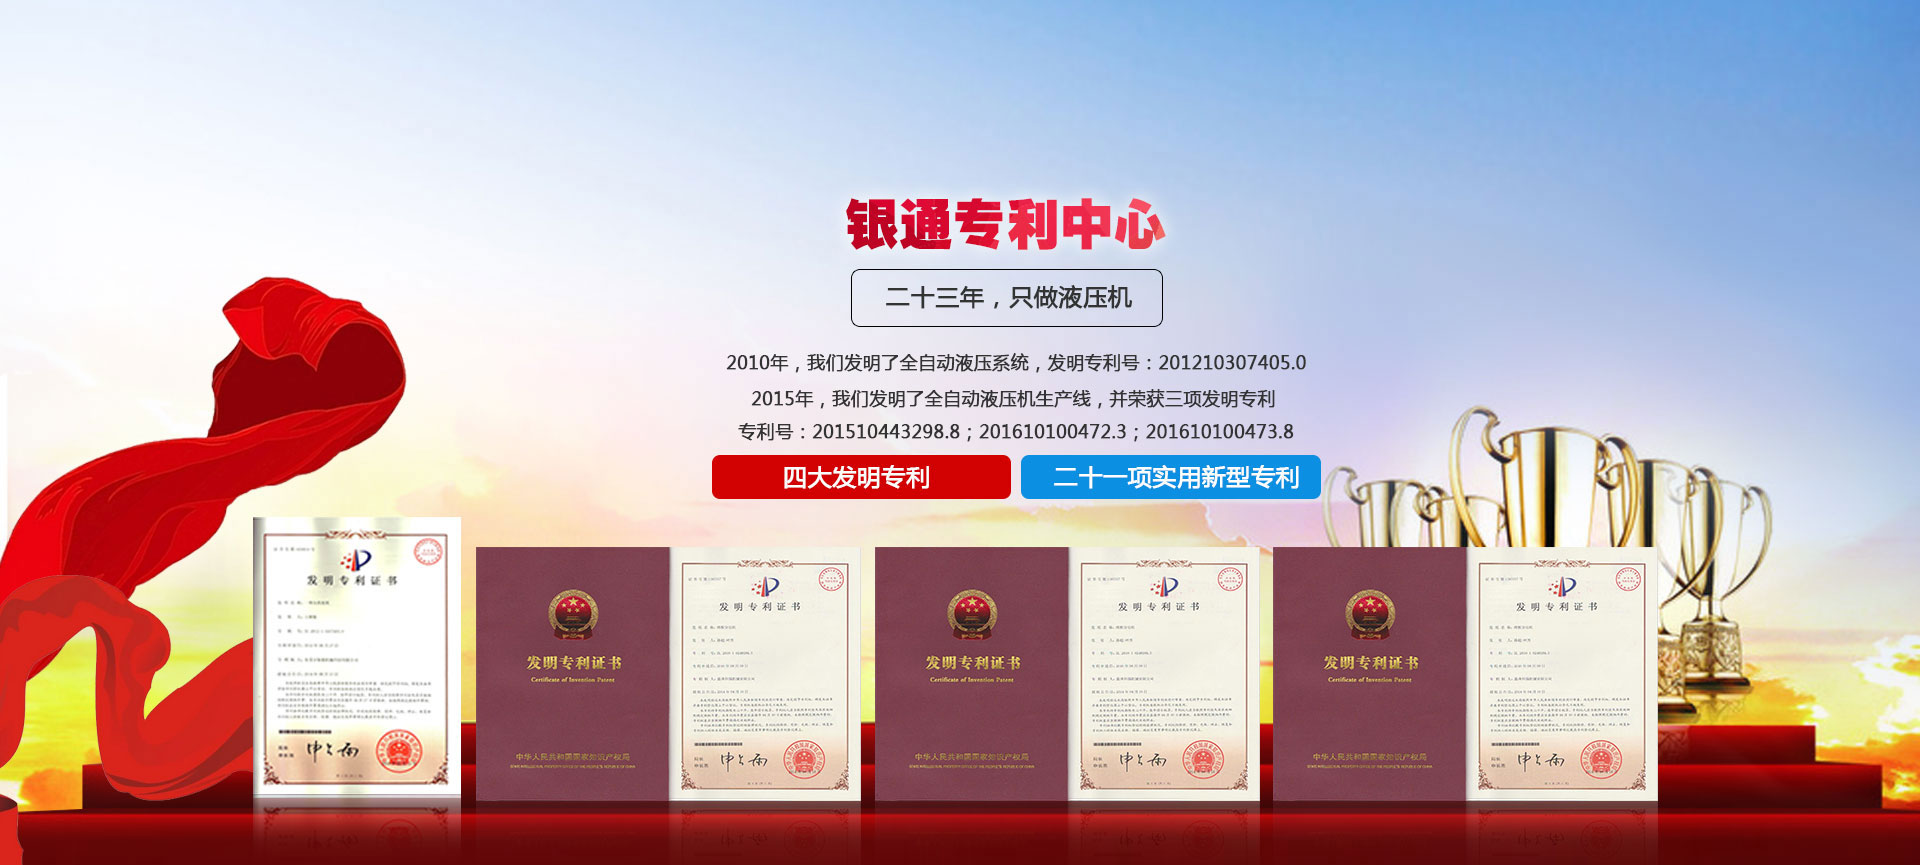 Yintong Patents